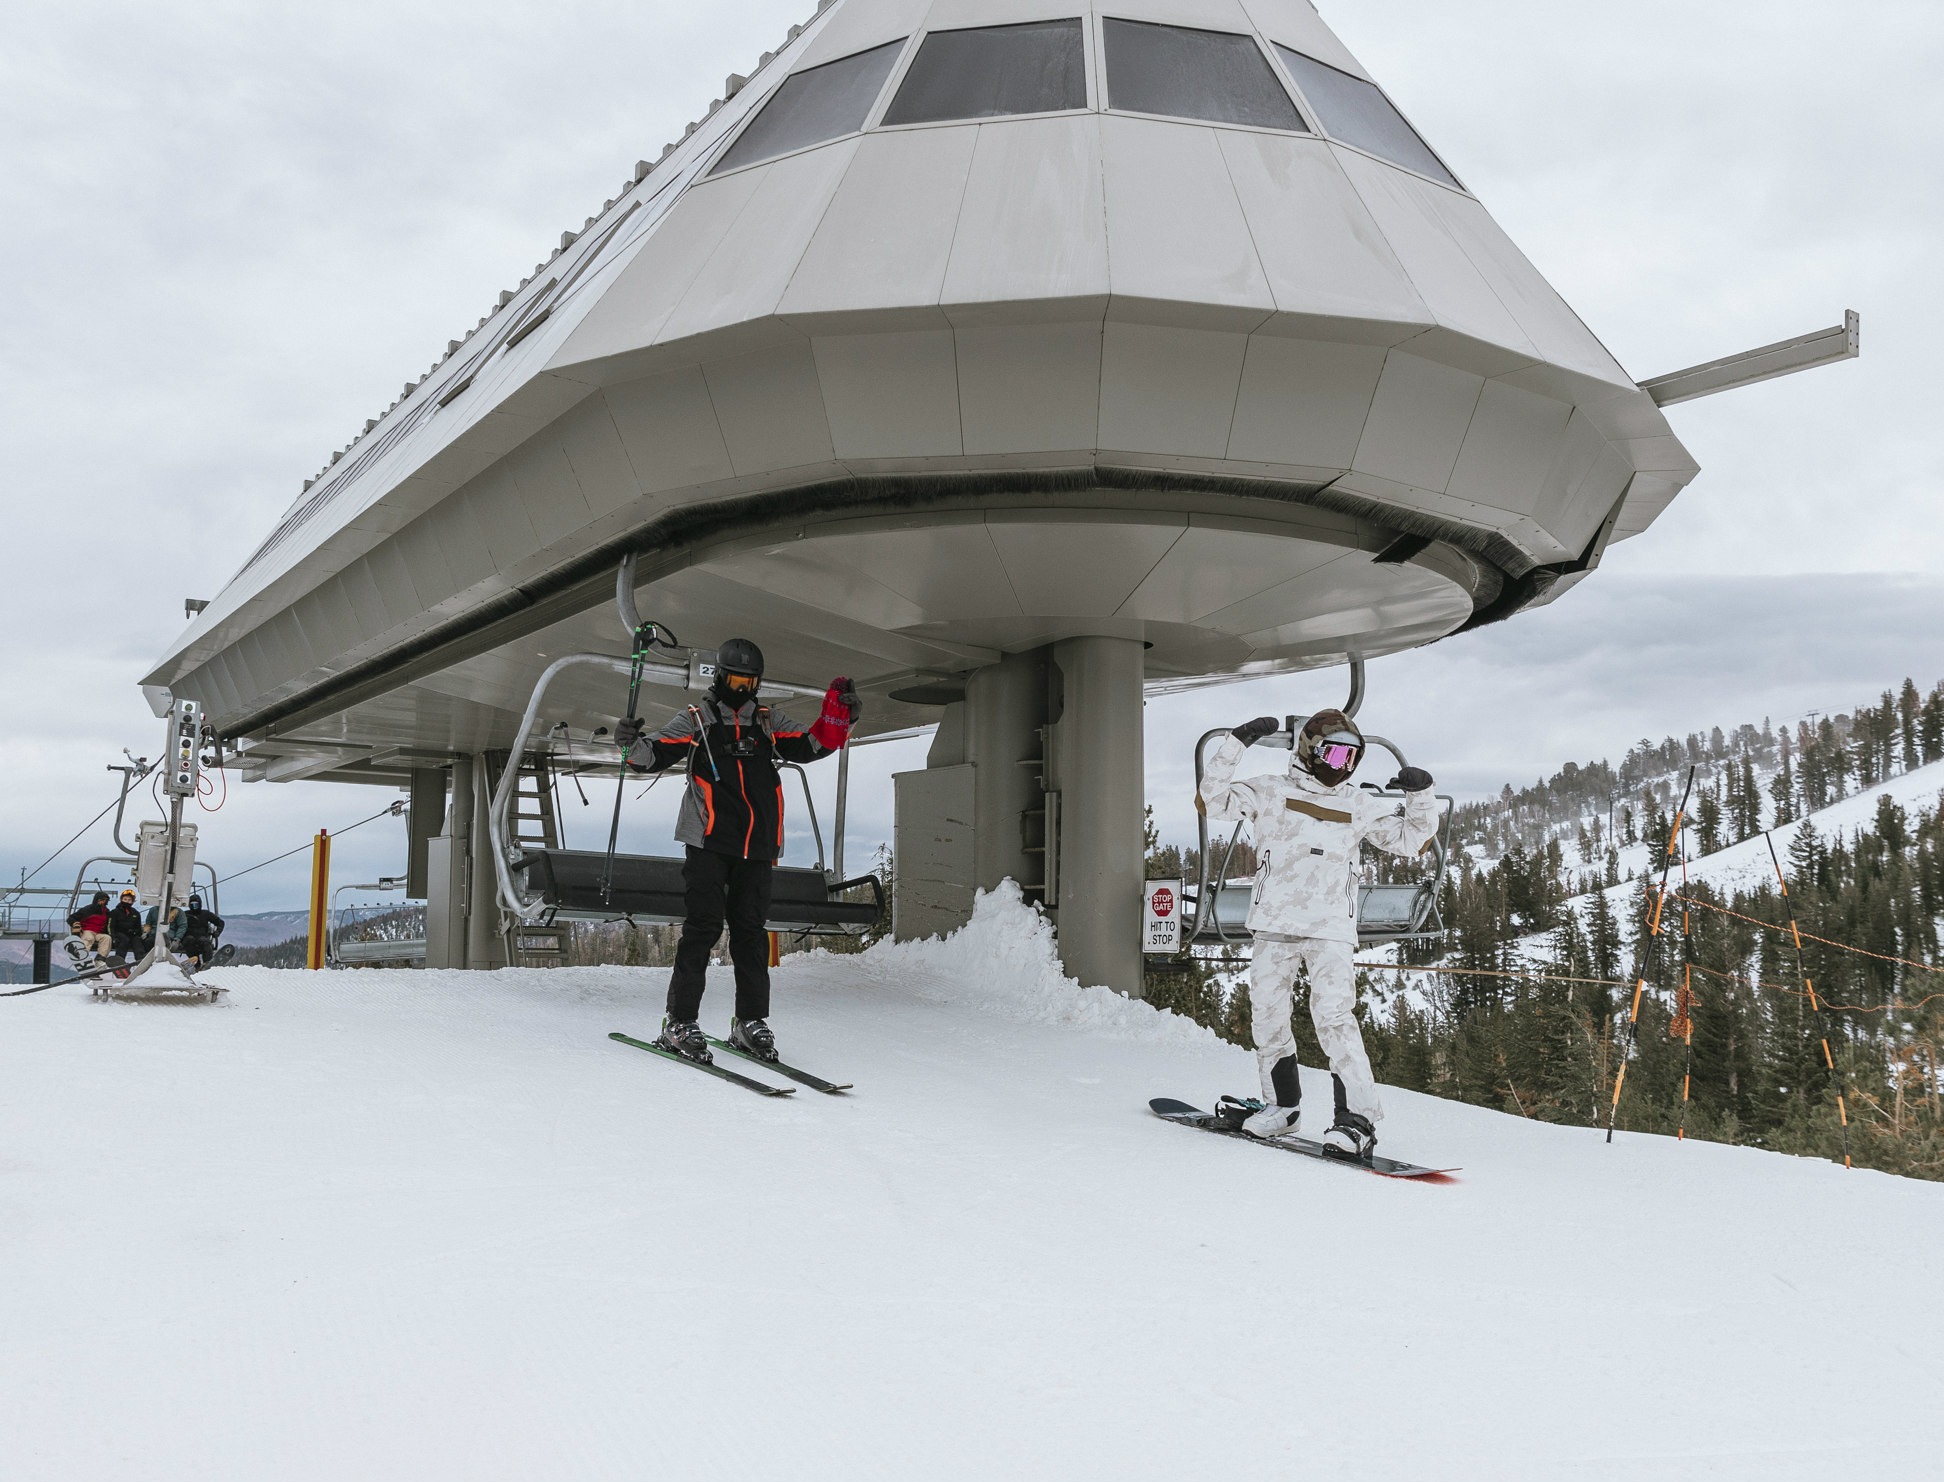 Mammoth ski resort opening October 29